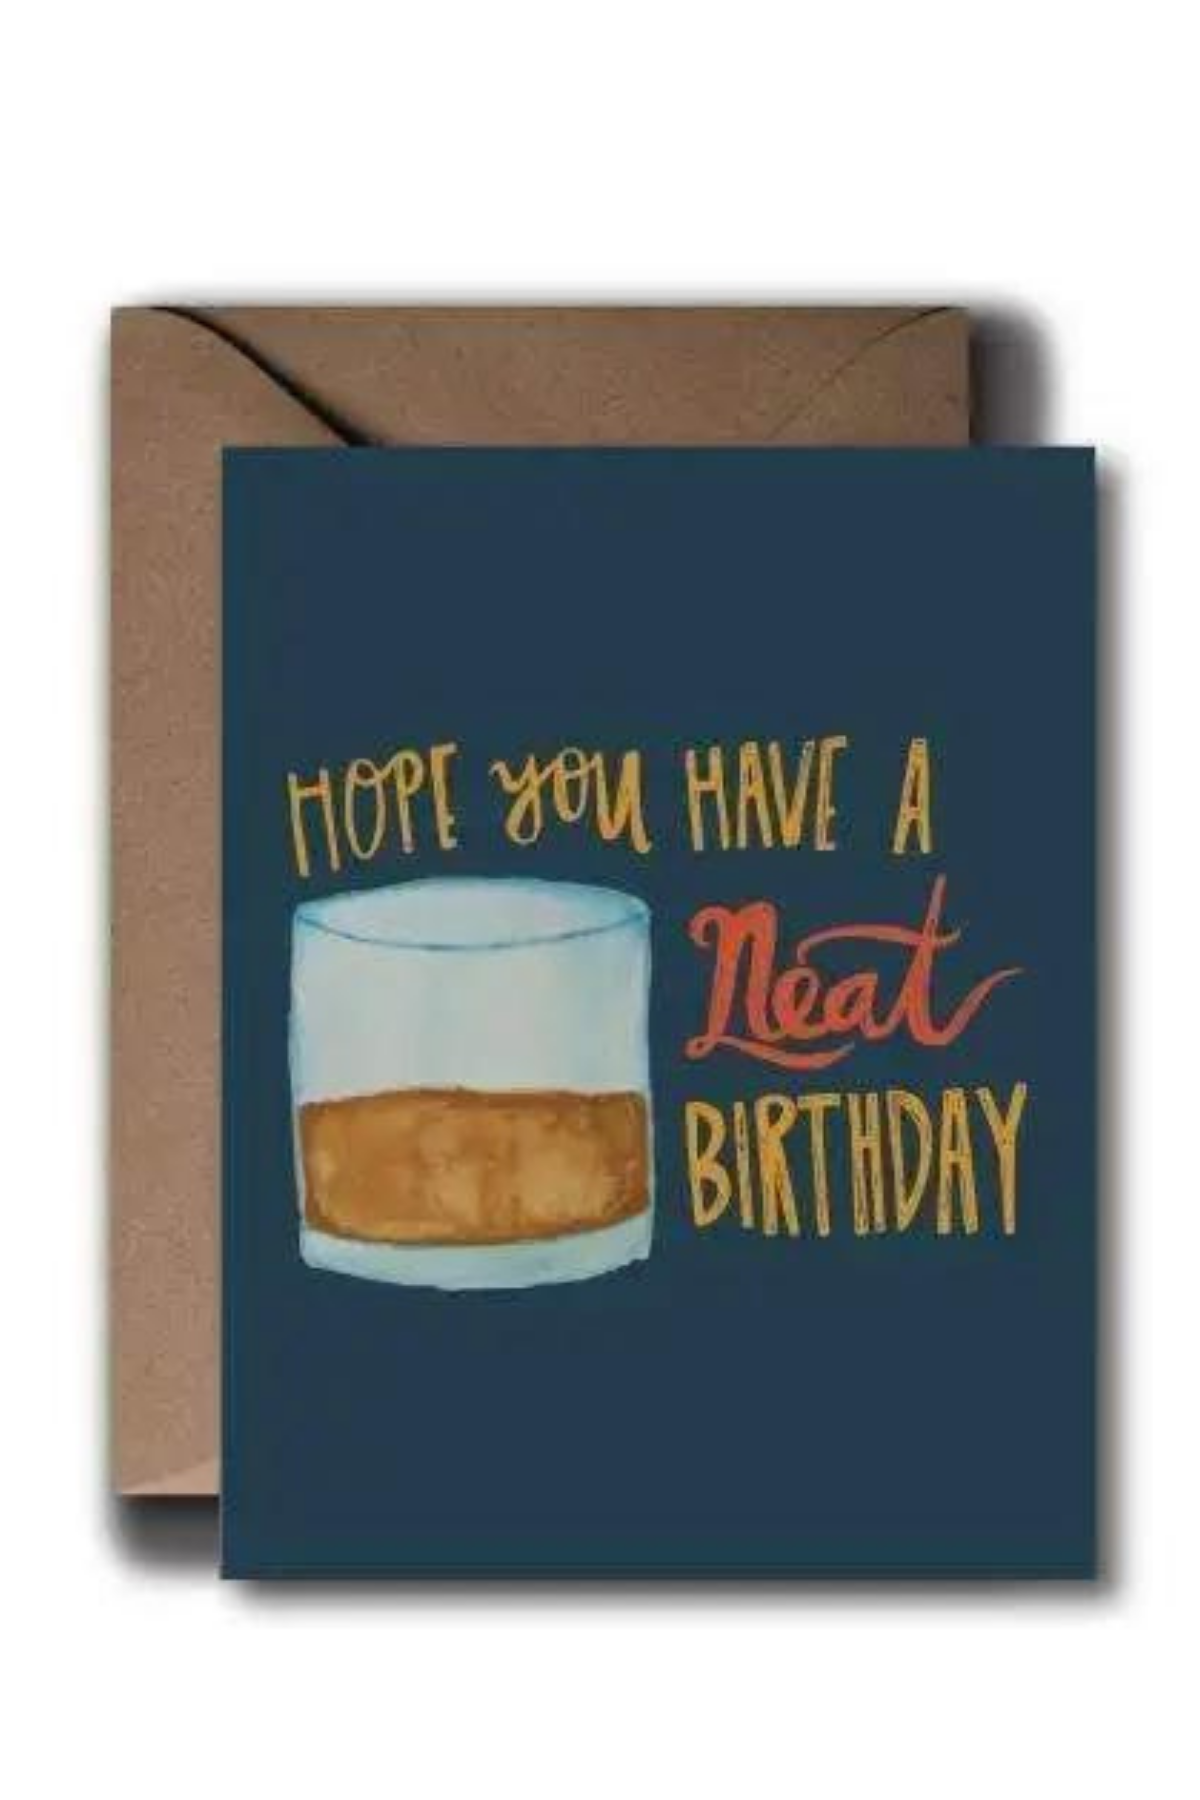 Neat Cocktail Birthday Card